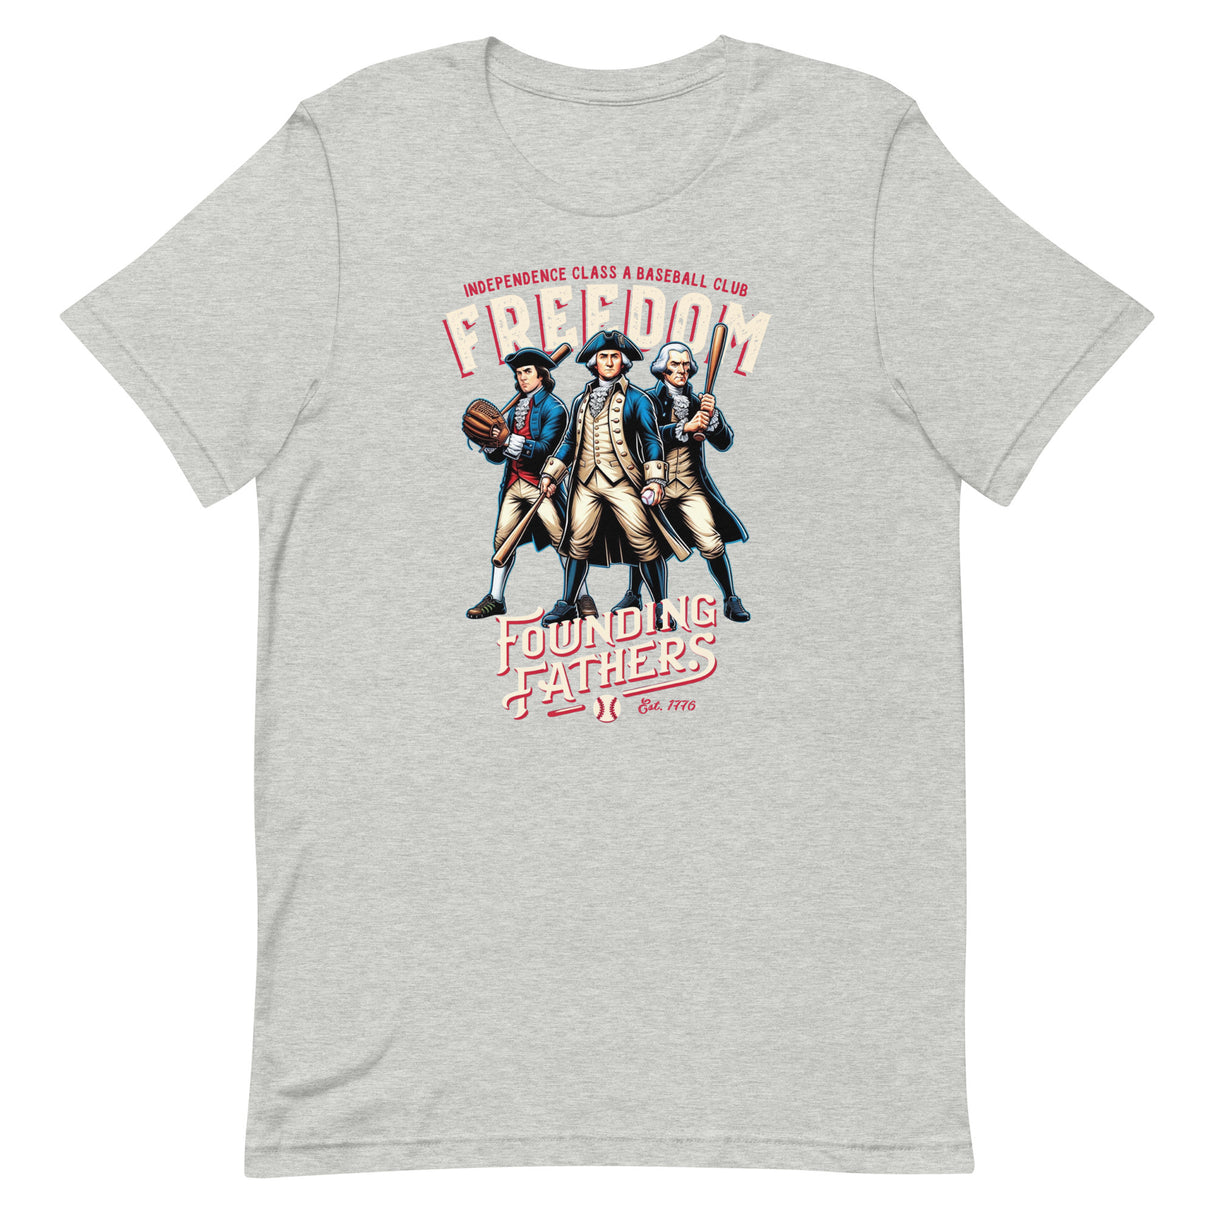 Freedom Founding Fathers Retro Minor League Baseball Team-Unisex t-shirt